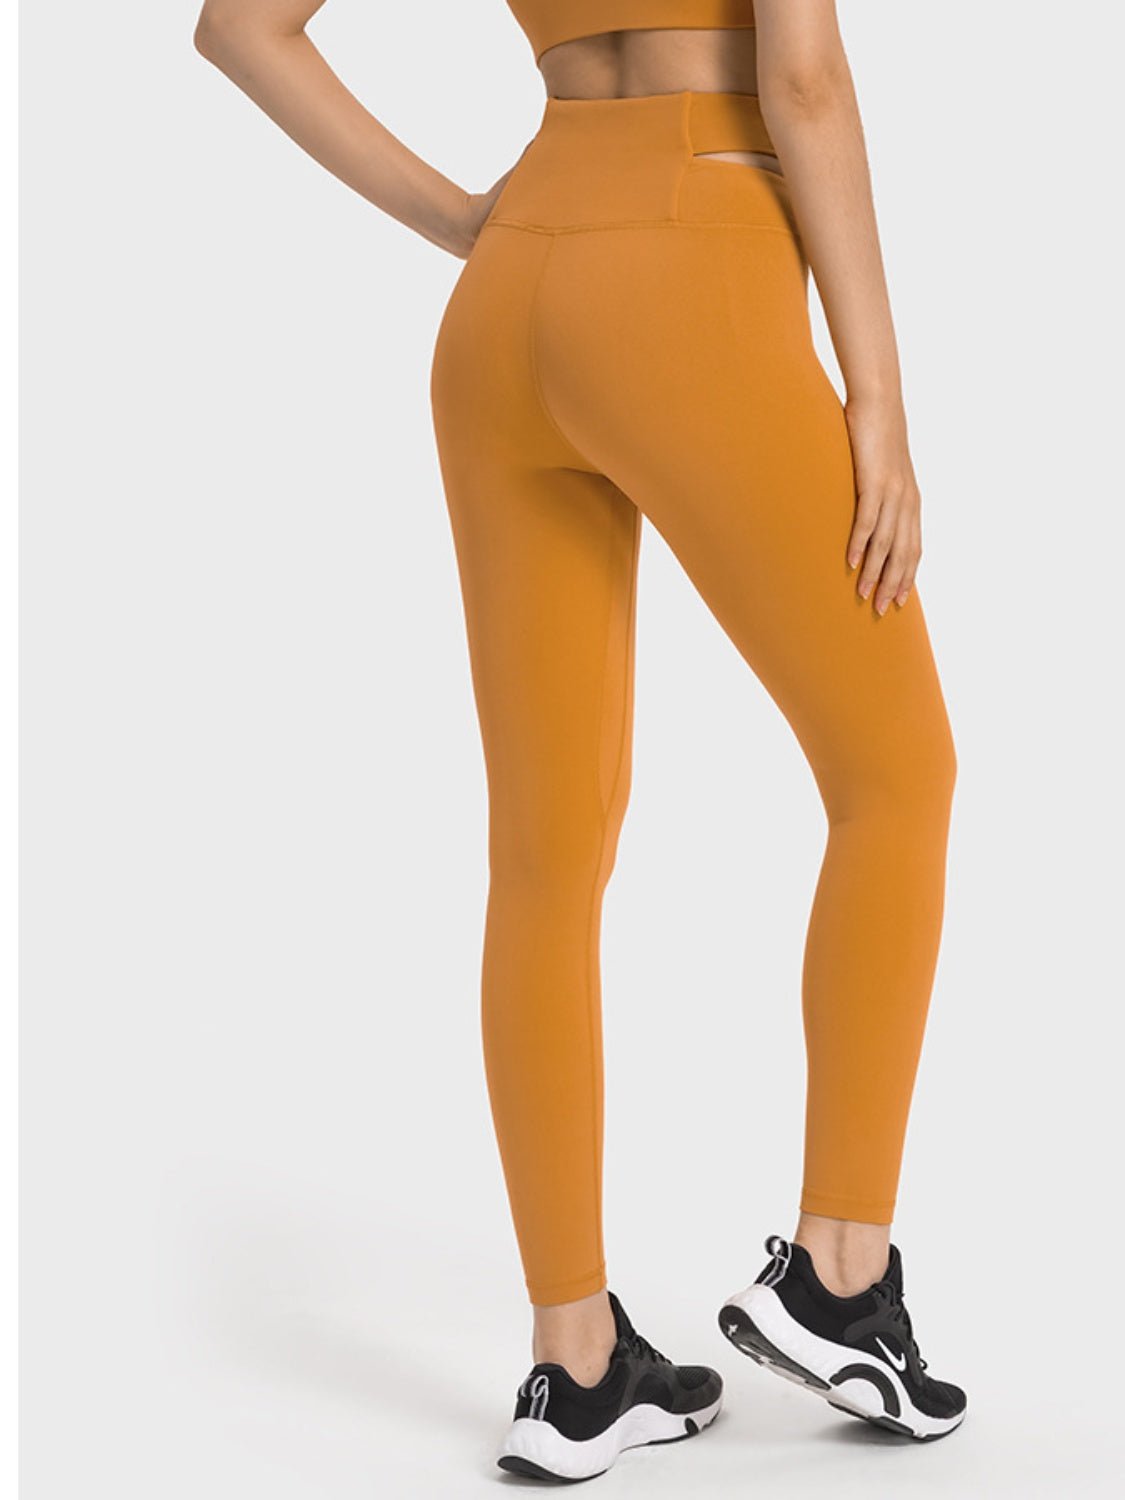 Crisscross Cutout Sports Leggings - Fashion Girl Online Store